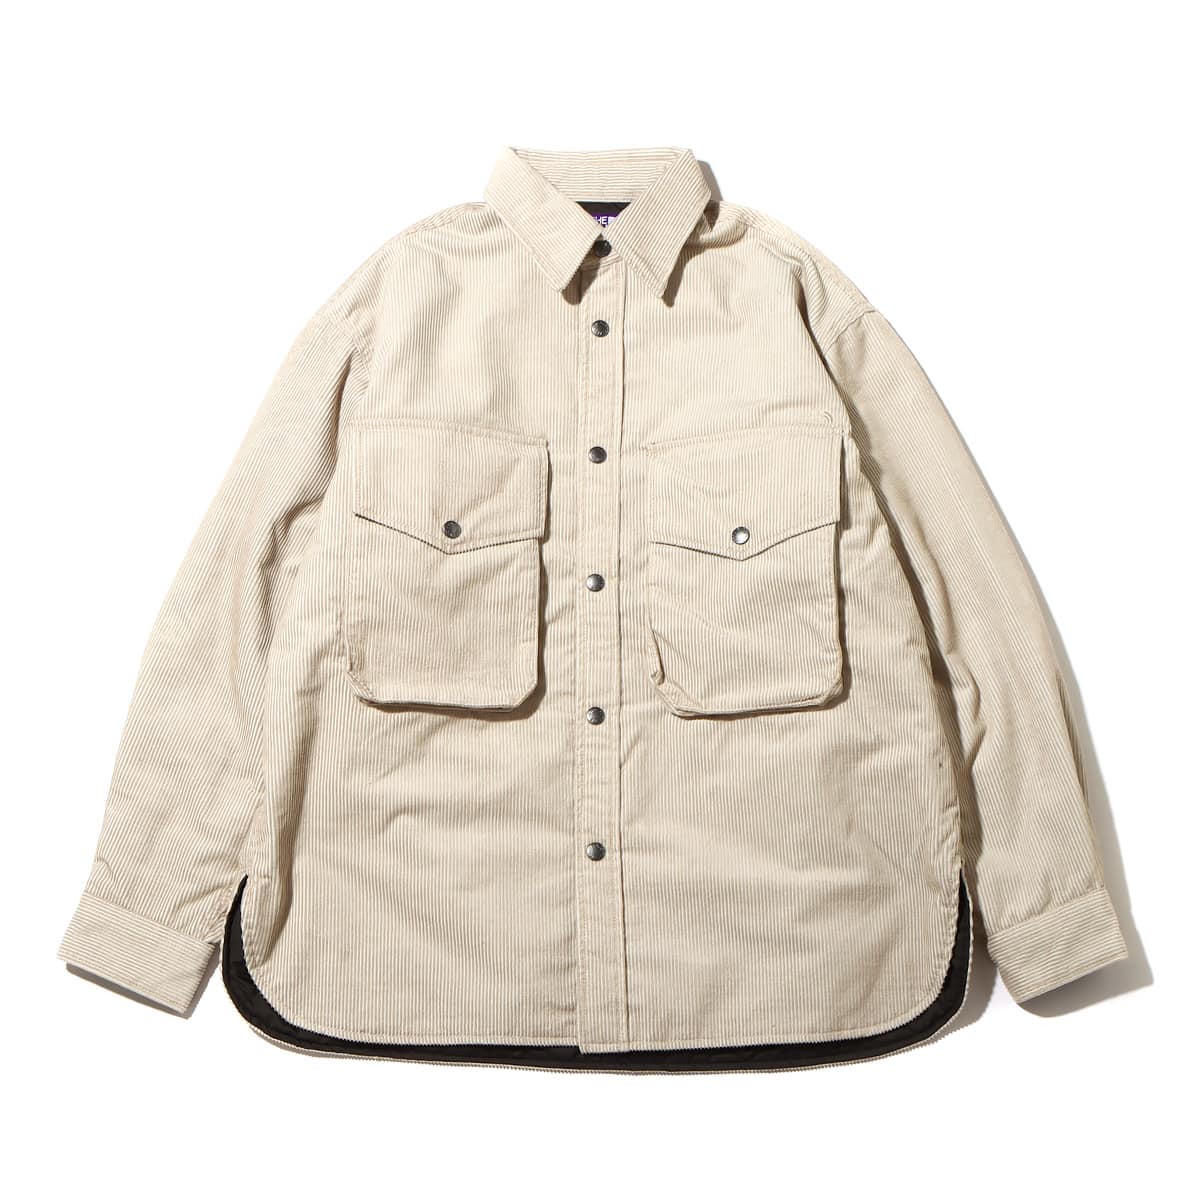 【最終値下】Corduroy Insulation Shirt Jacket着丈75cm